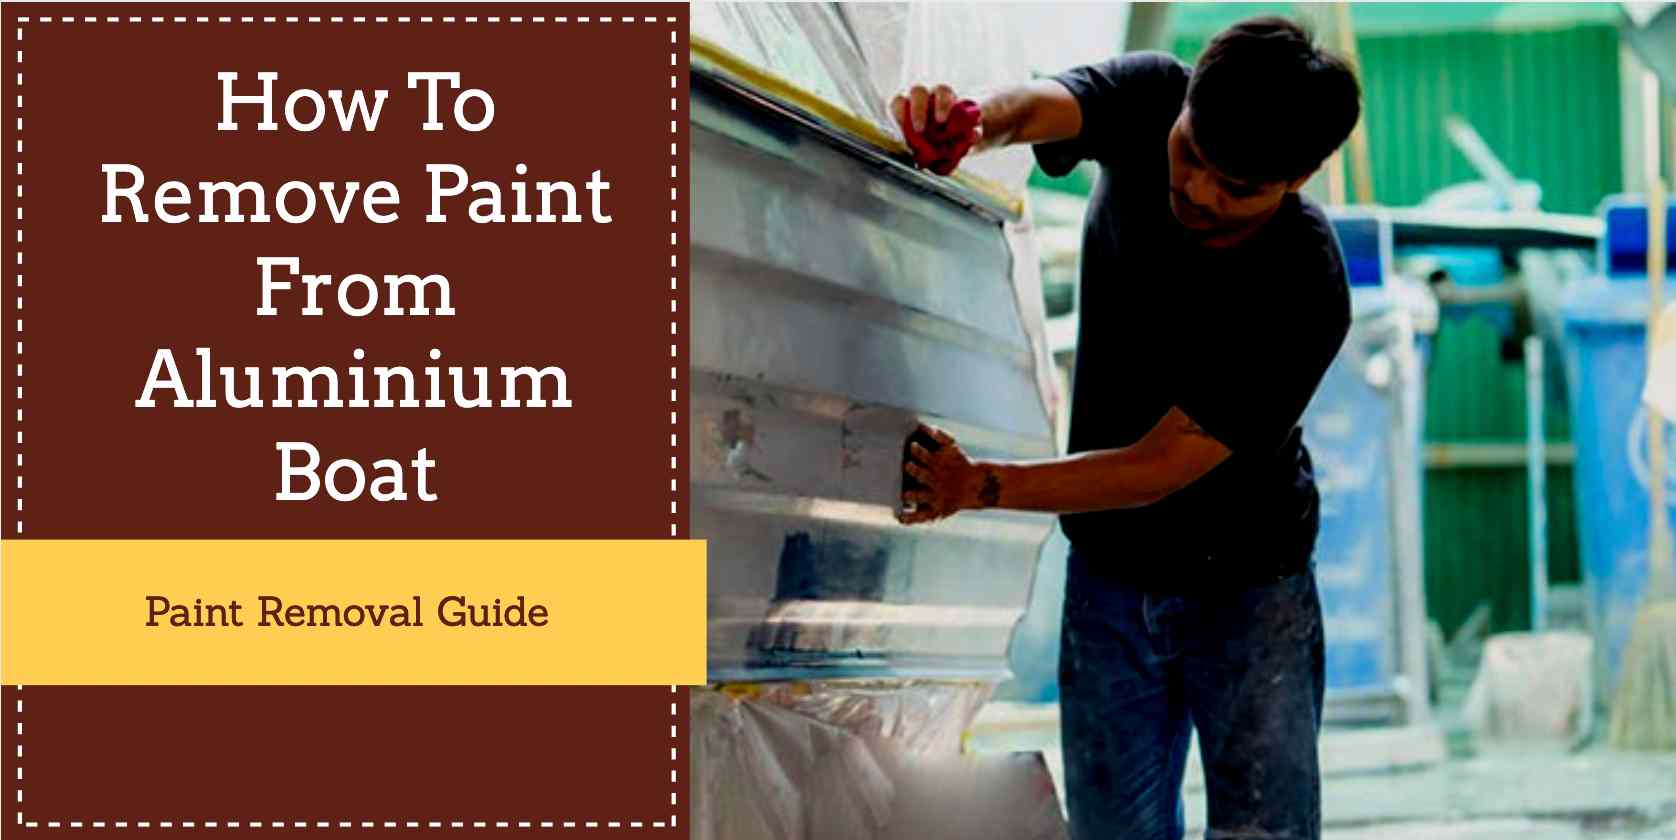 Removing paint from aluminium boat